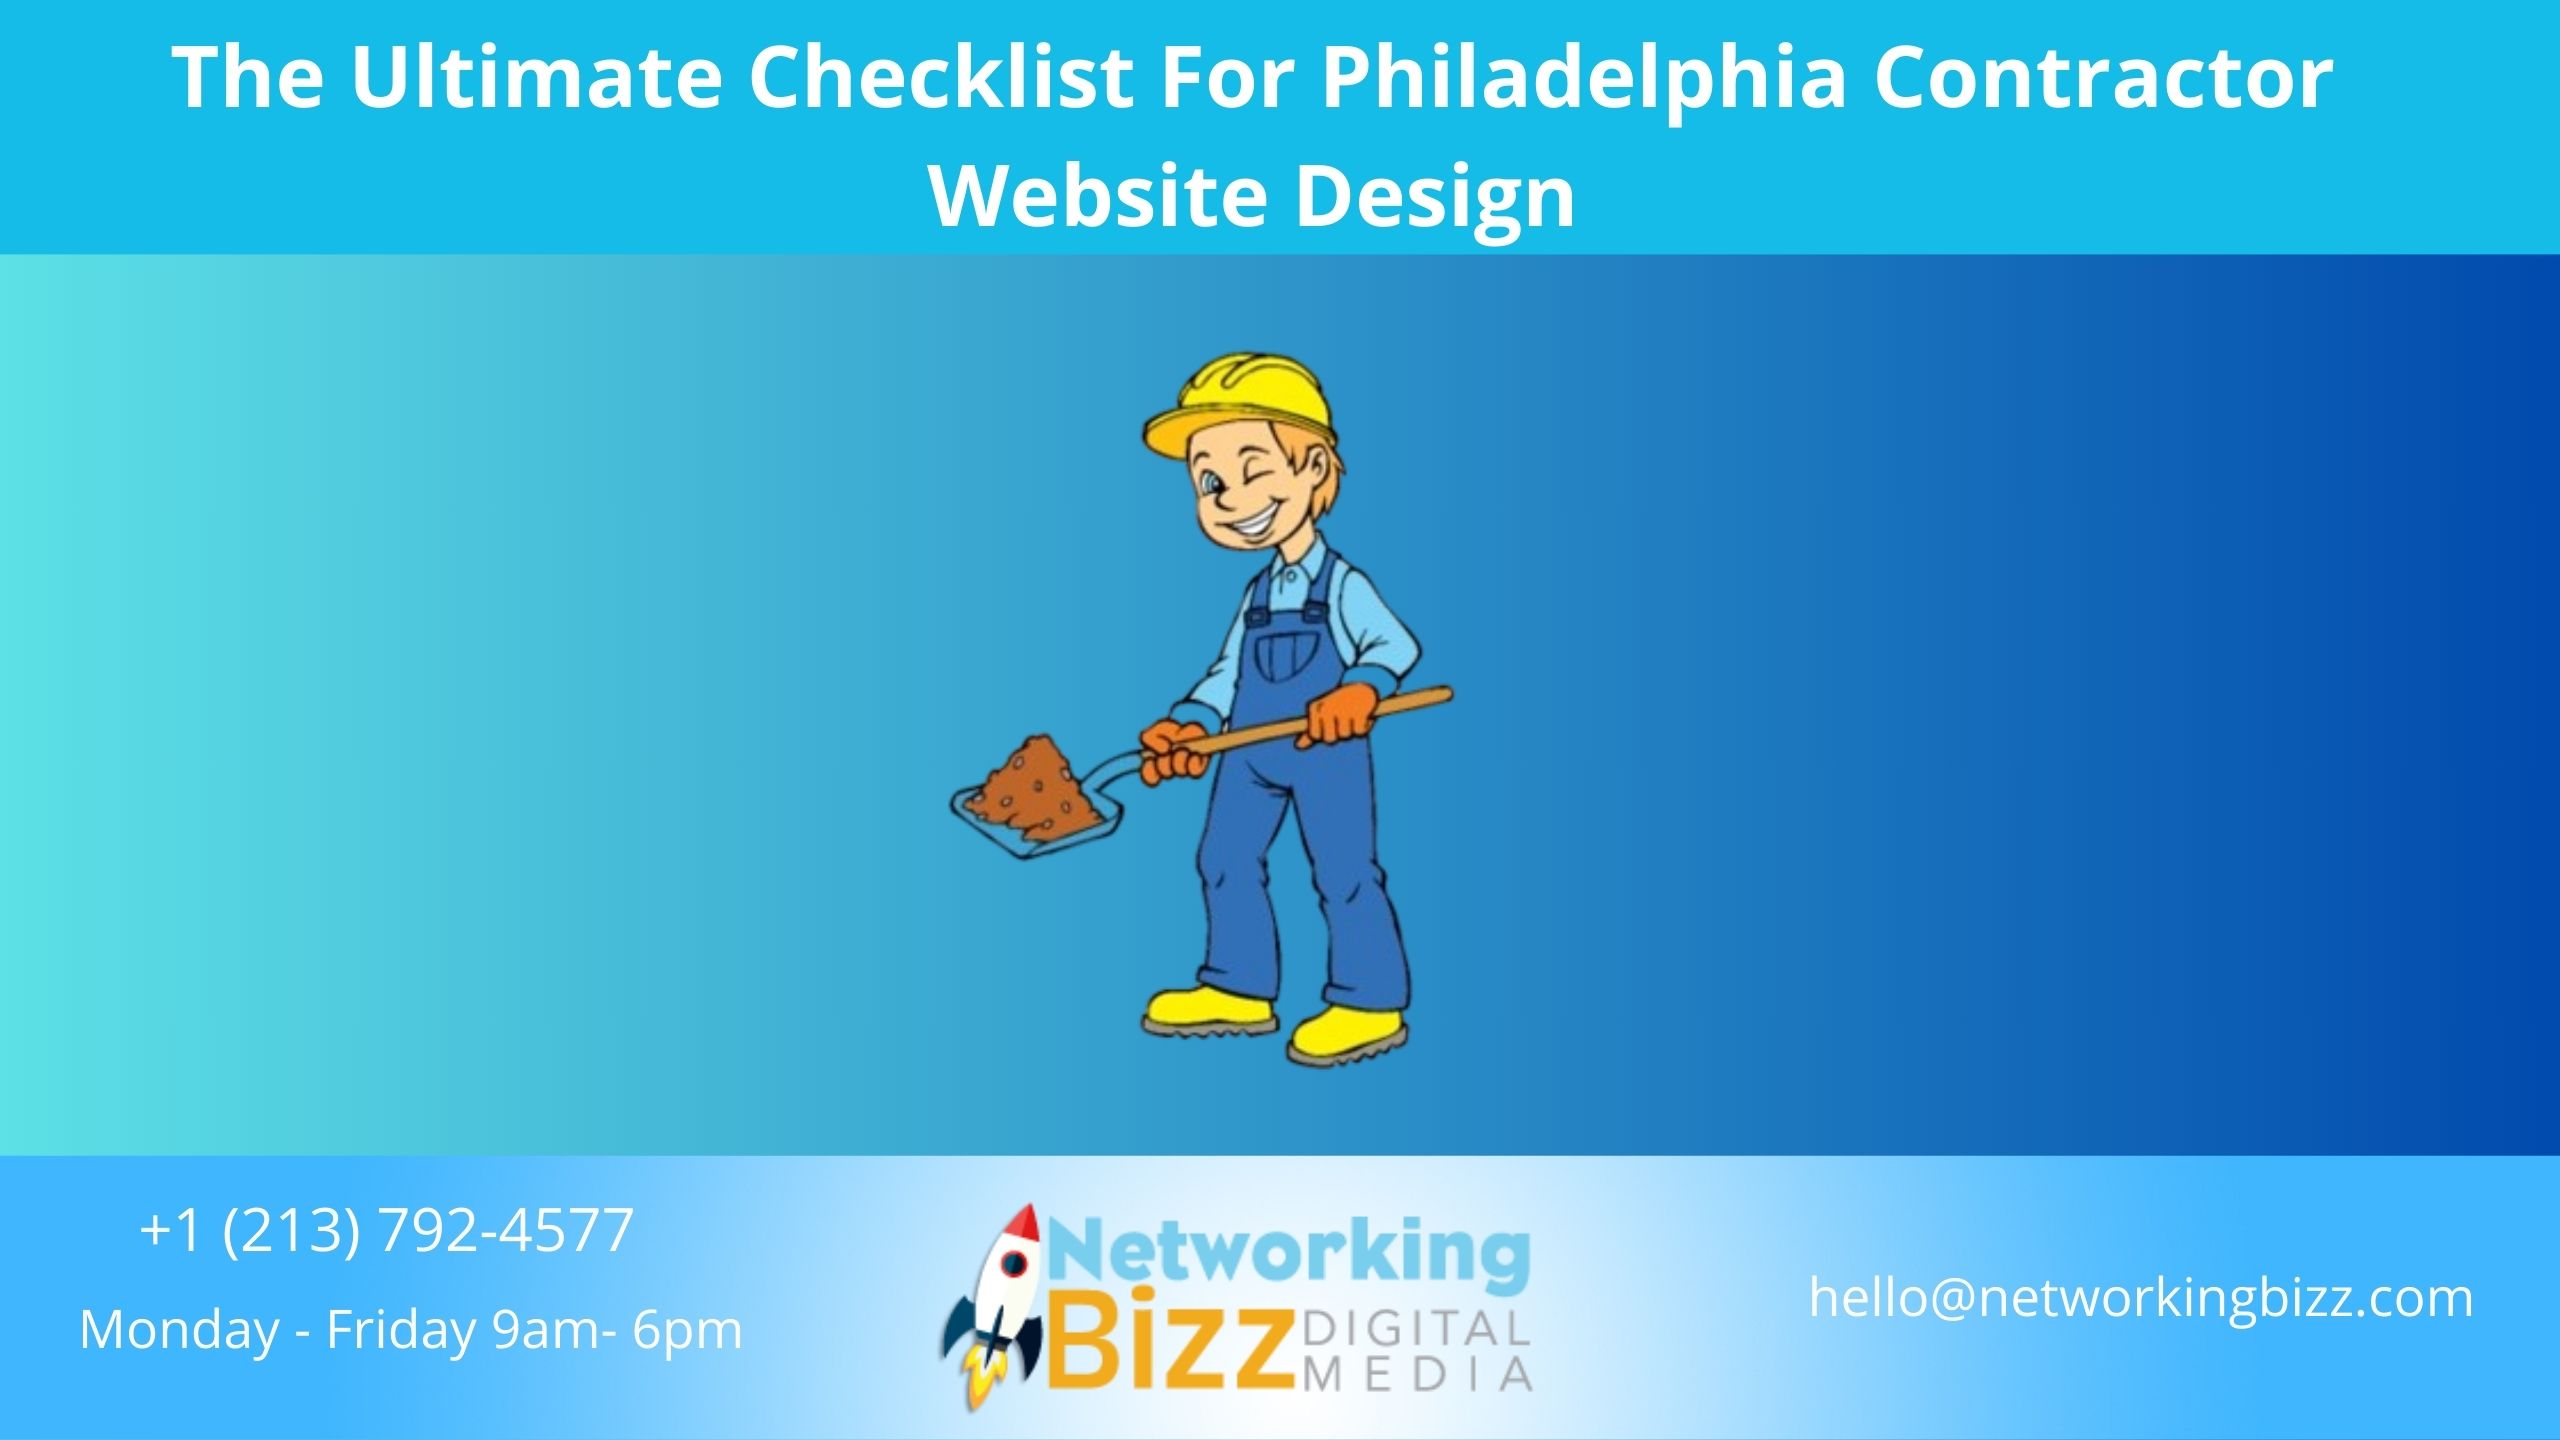 The Ultimate Checklist For Philadelphia Contractor Website Design